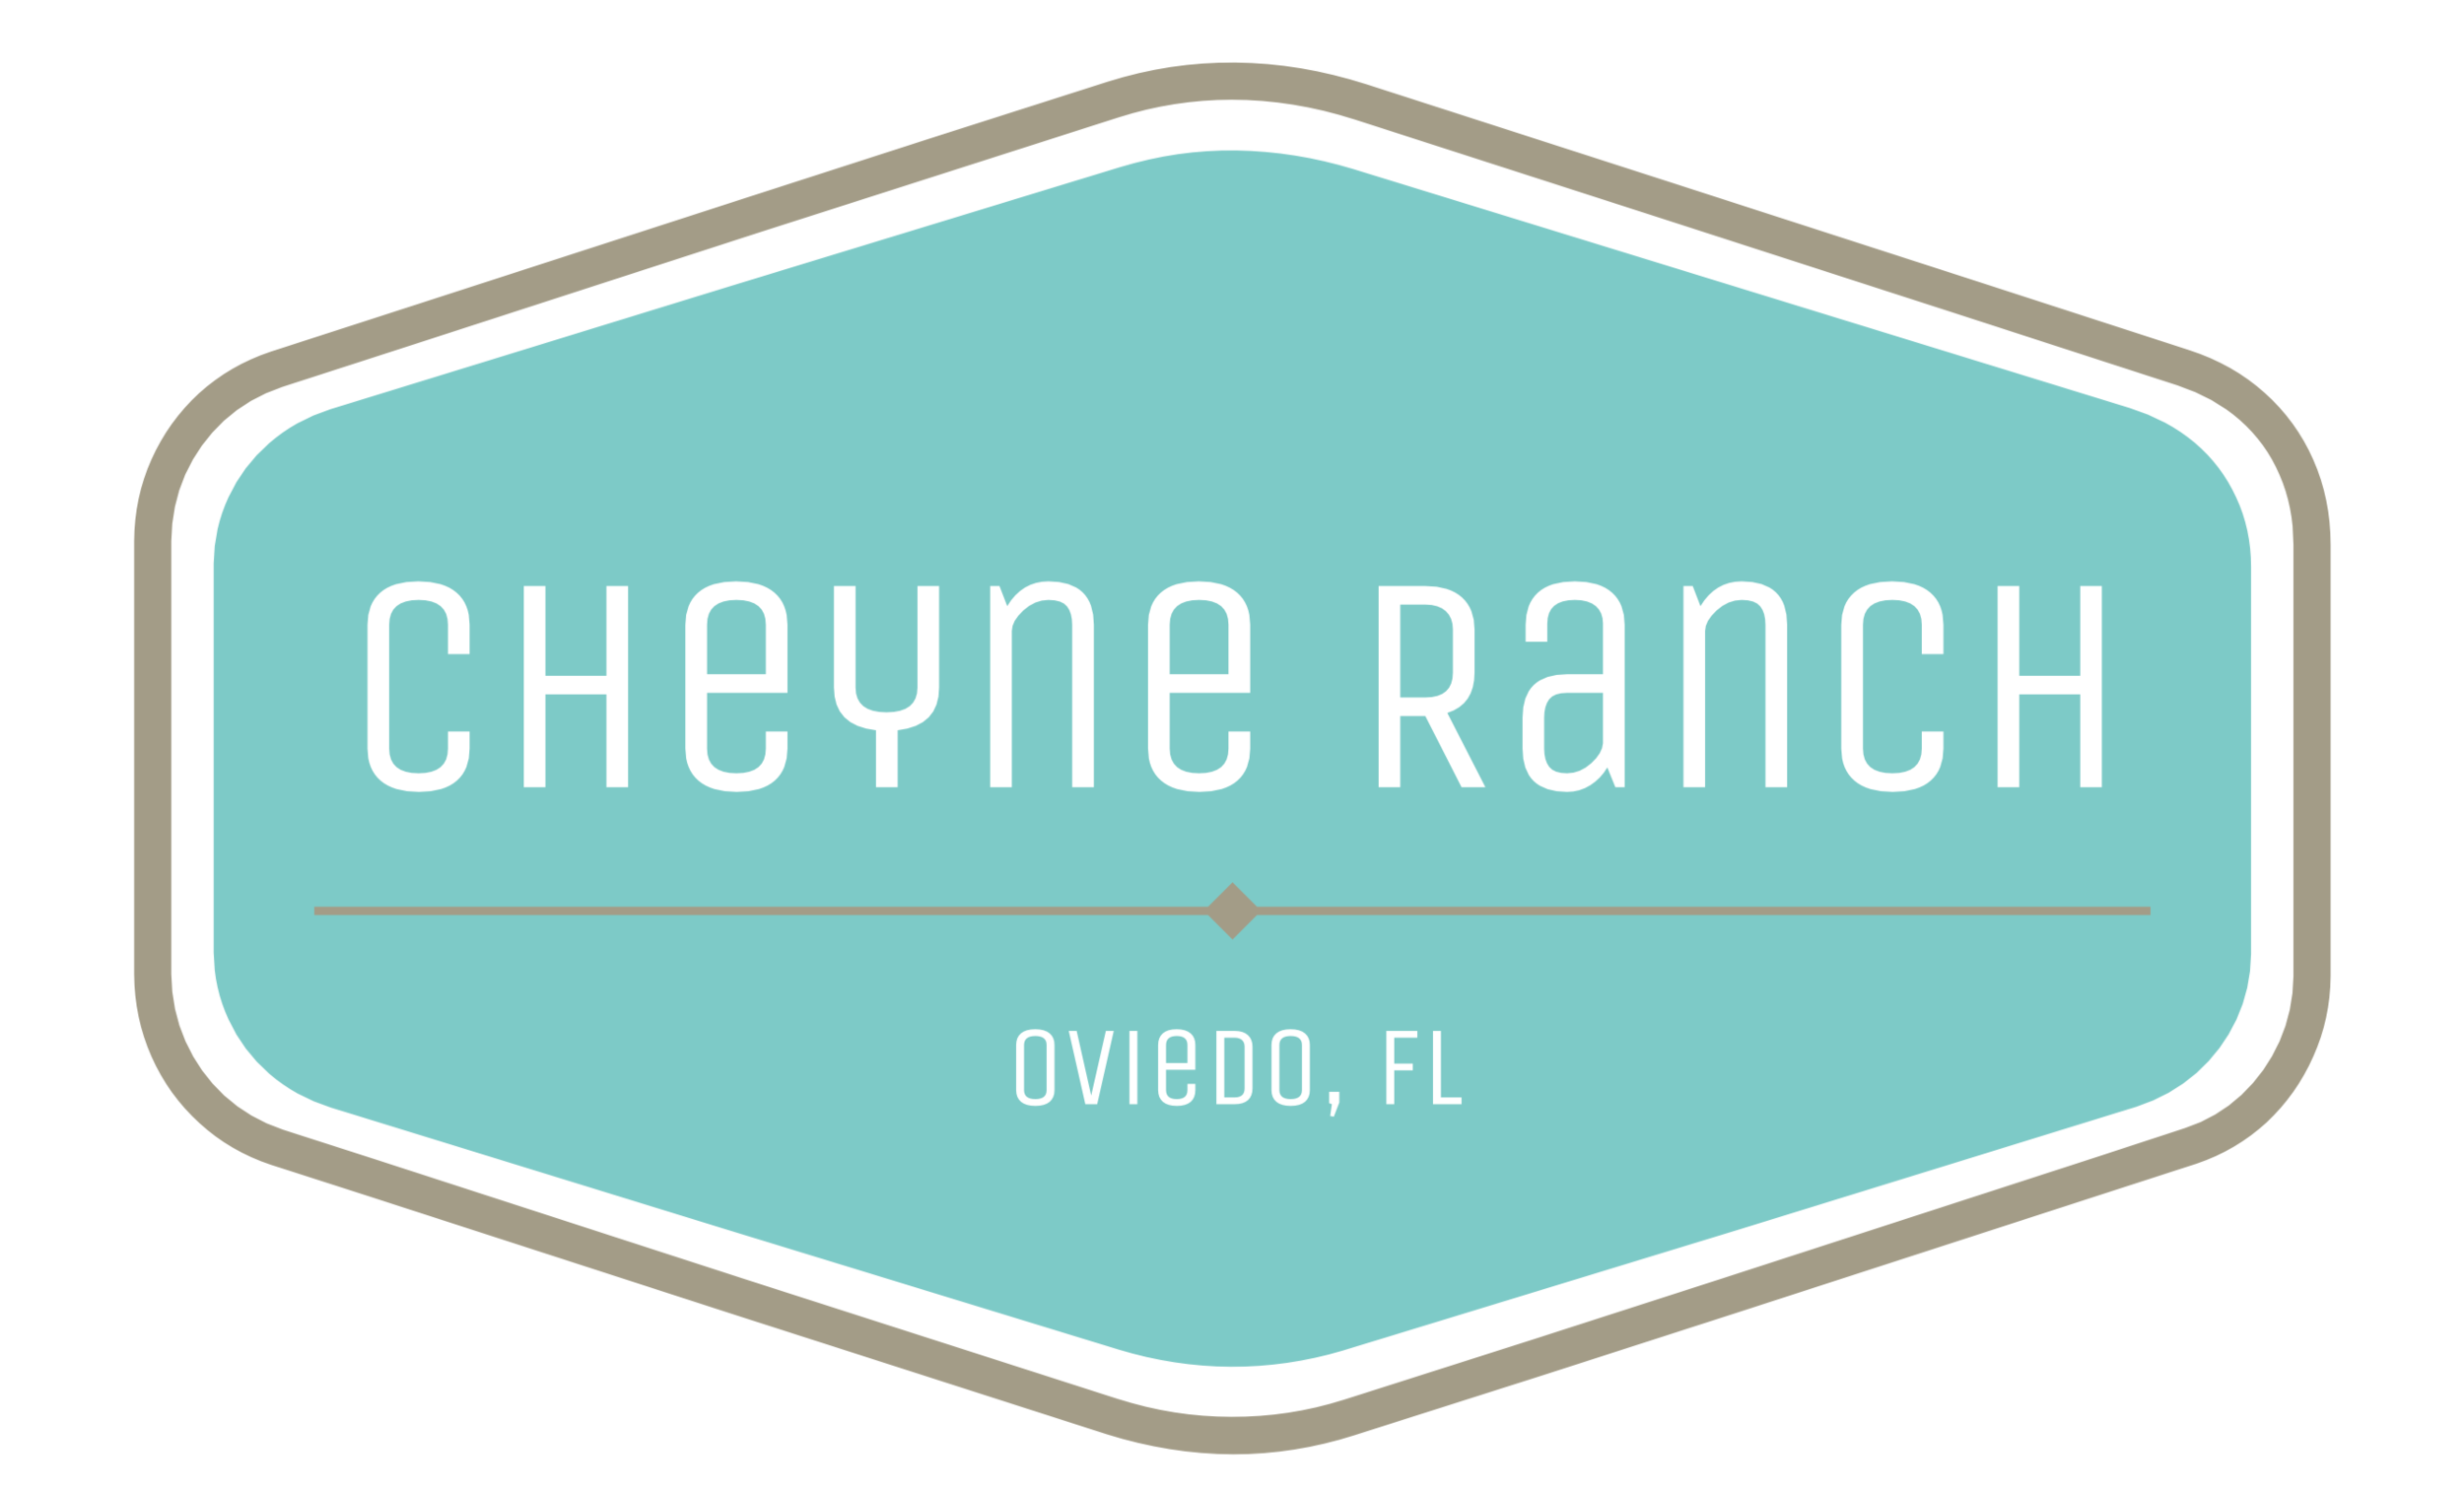 Cheyne Ranch